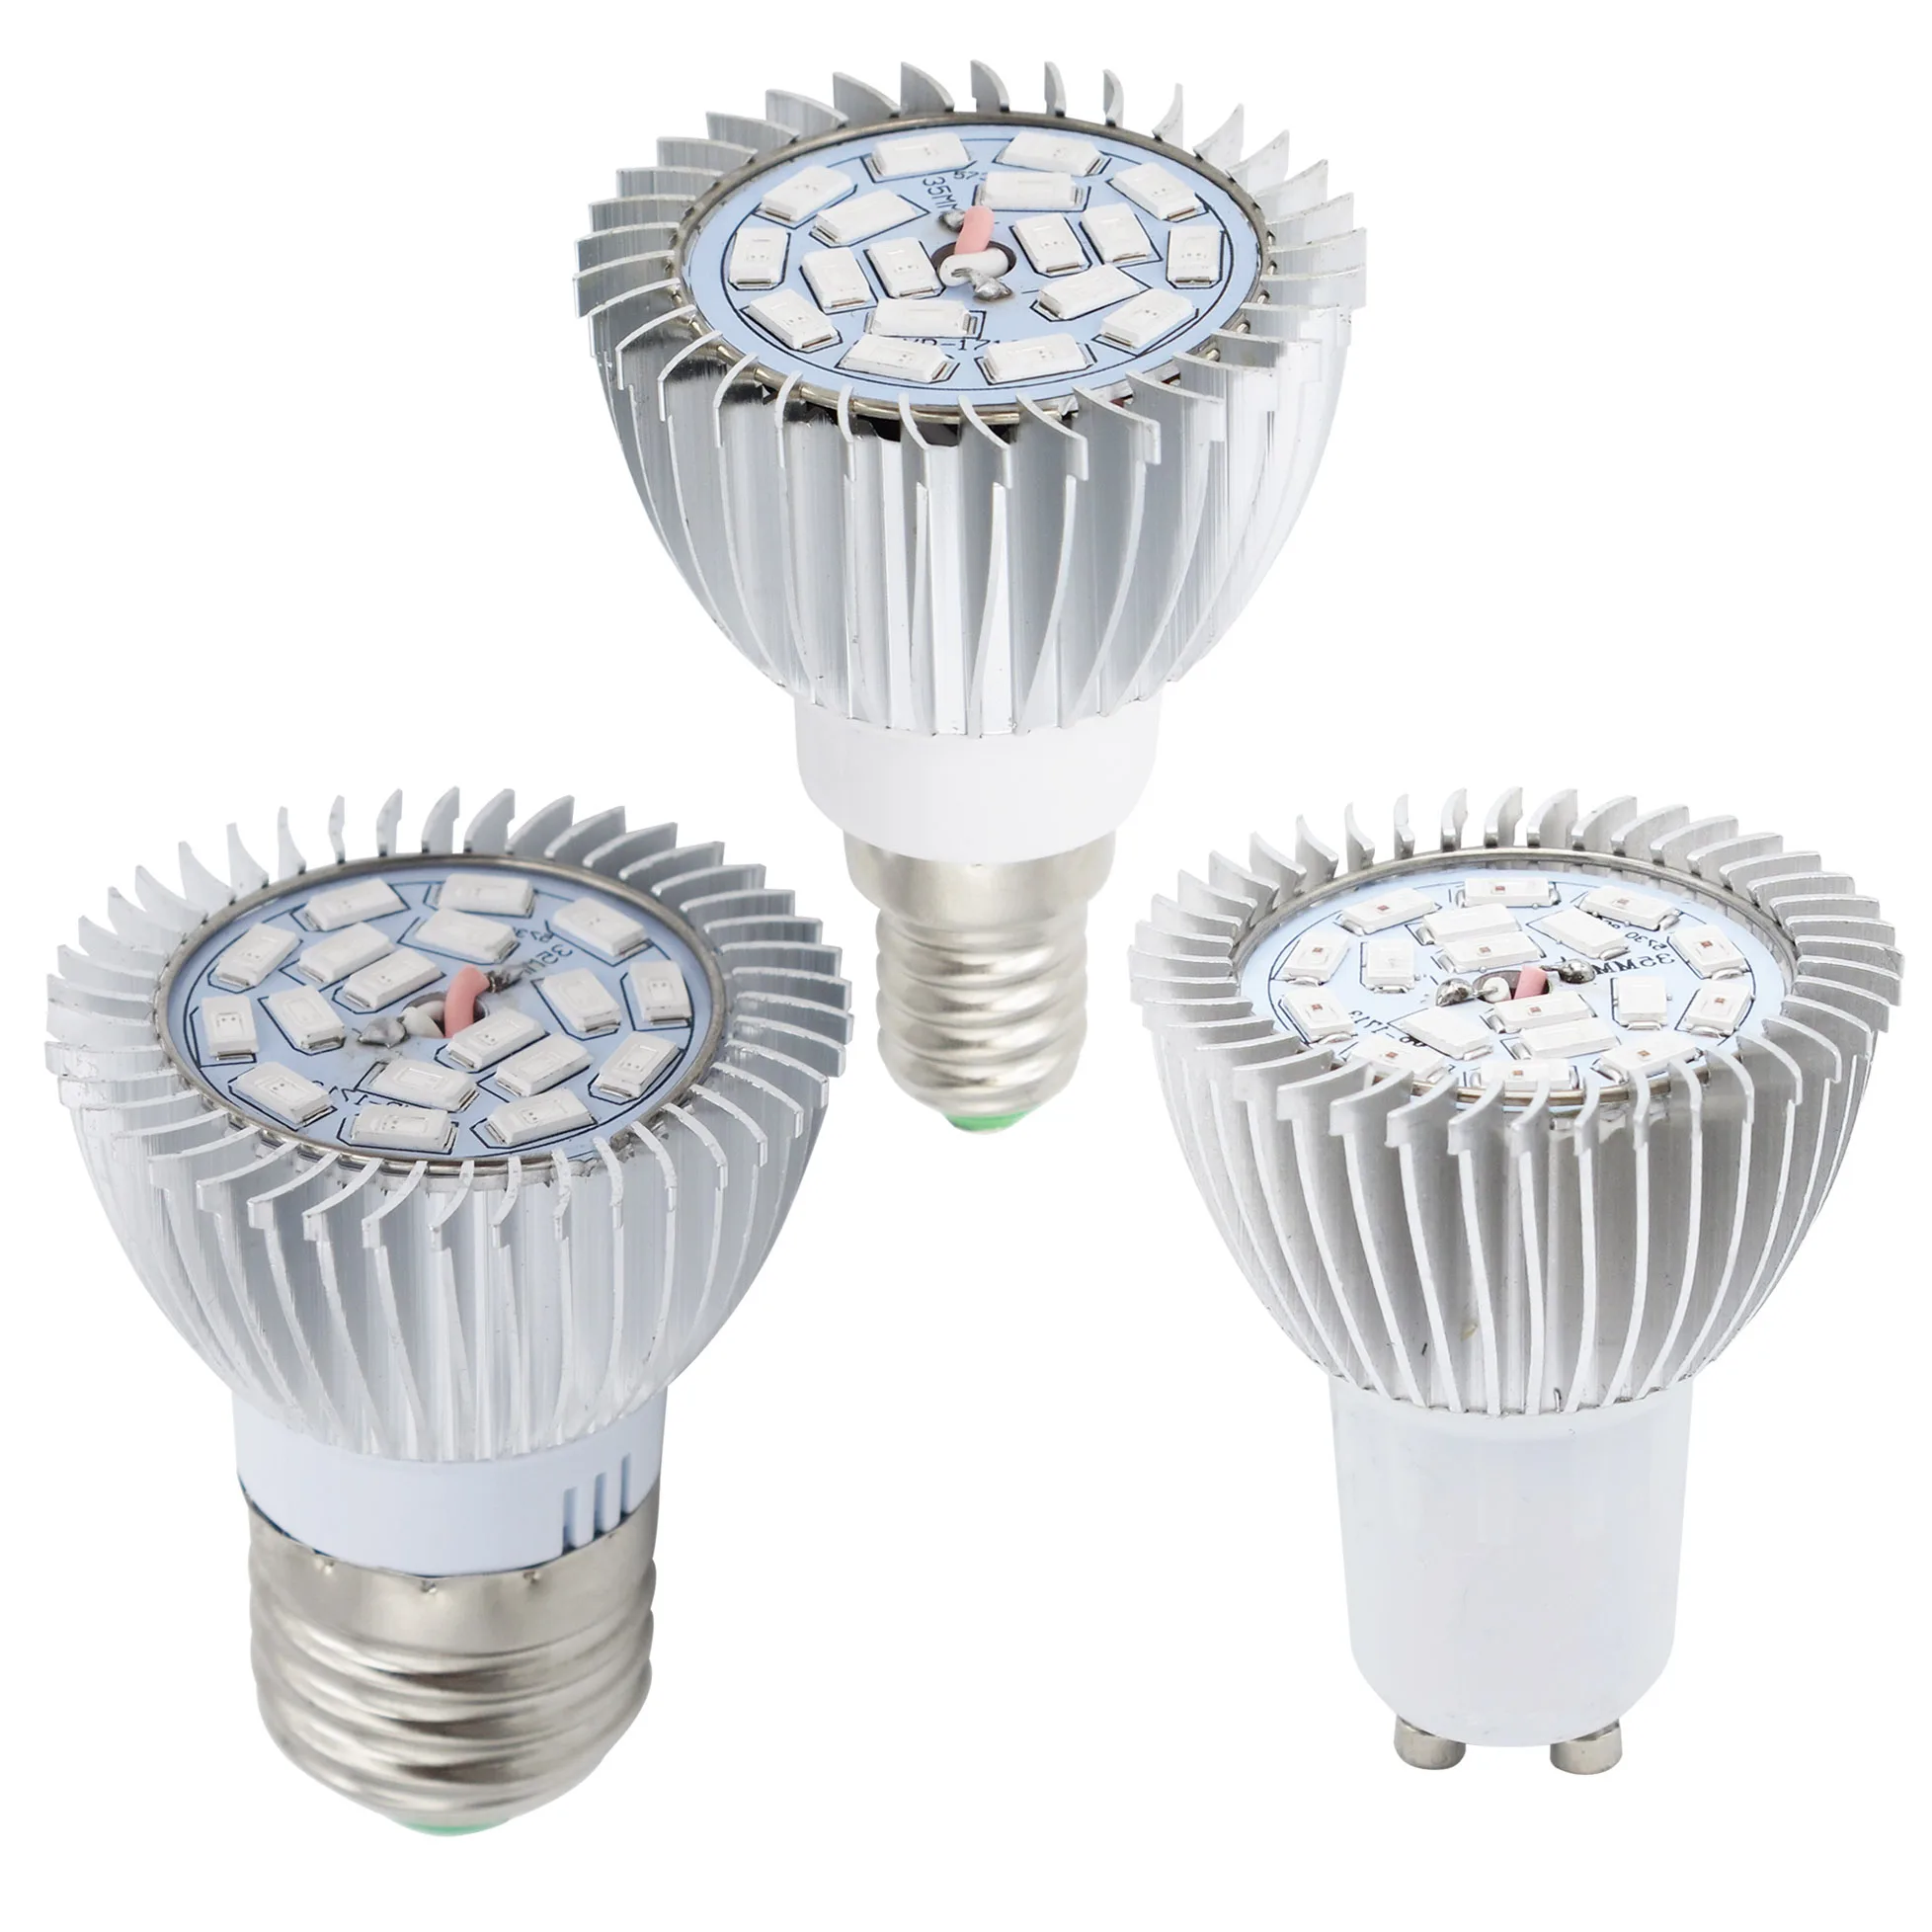 

1pcs E27 E14 3W 5730 LED Grow Light 18leds Full Spectrum Growth Lamp for Indoor Home Flower Plant Hydroponics System AC 85-265V